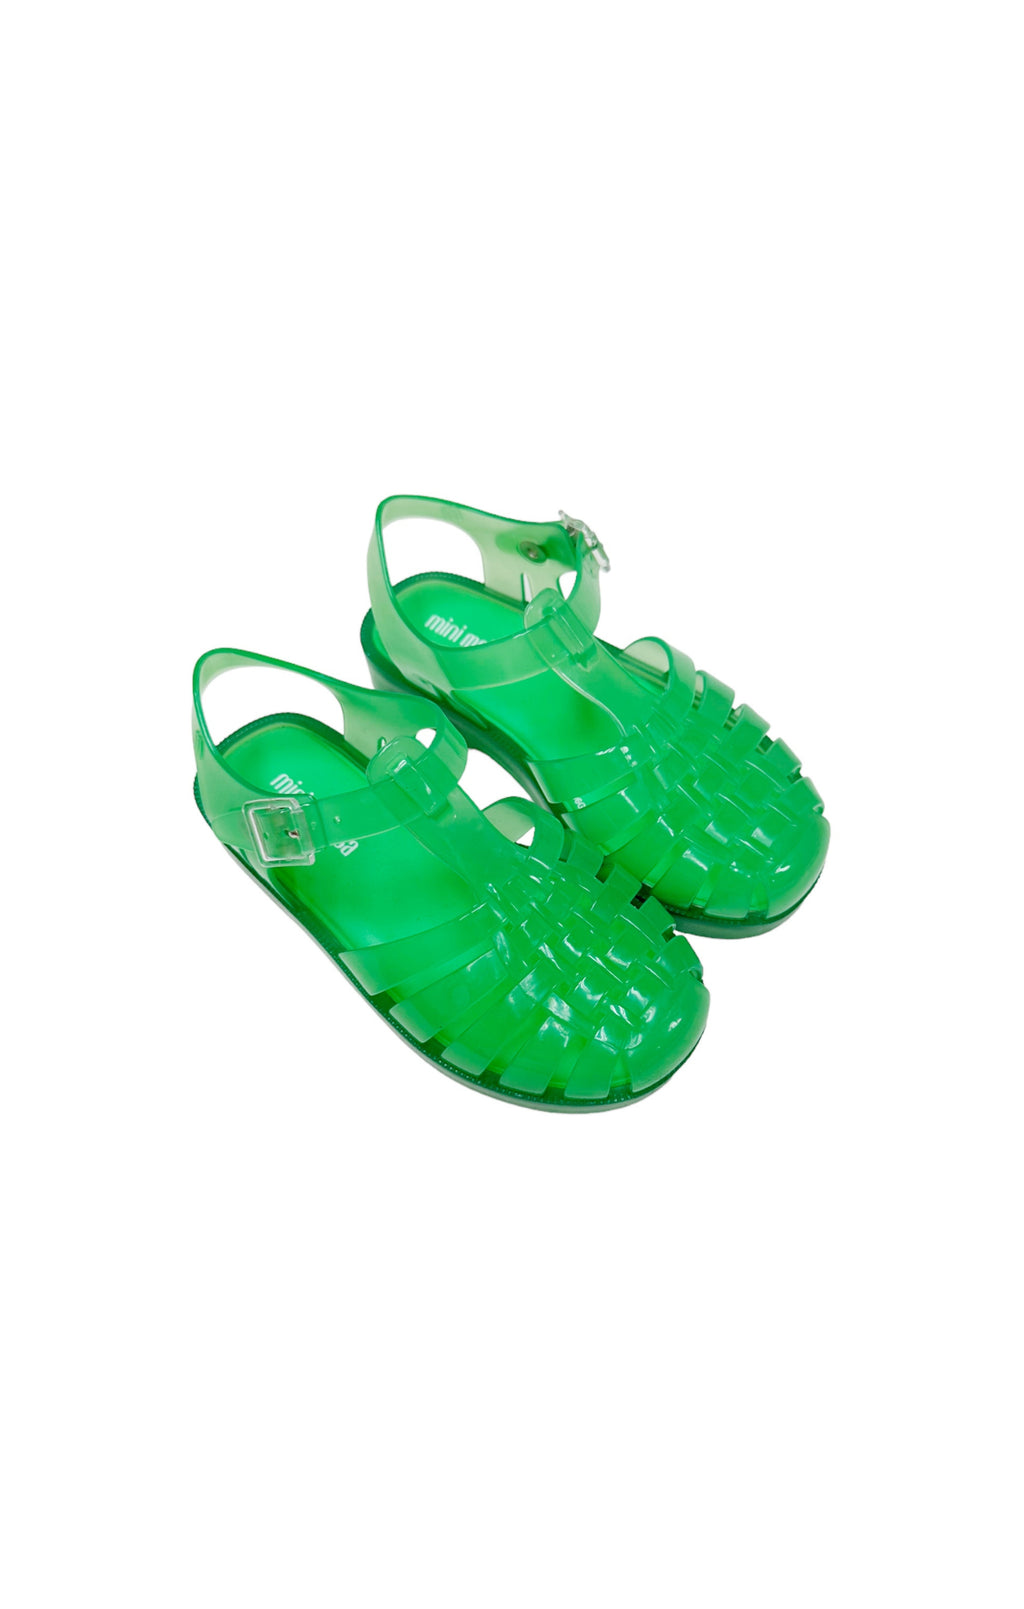 MINI MELISSA Shoes Size: Toddler US 11